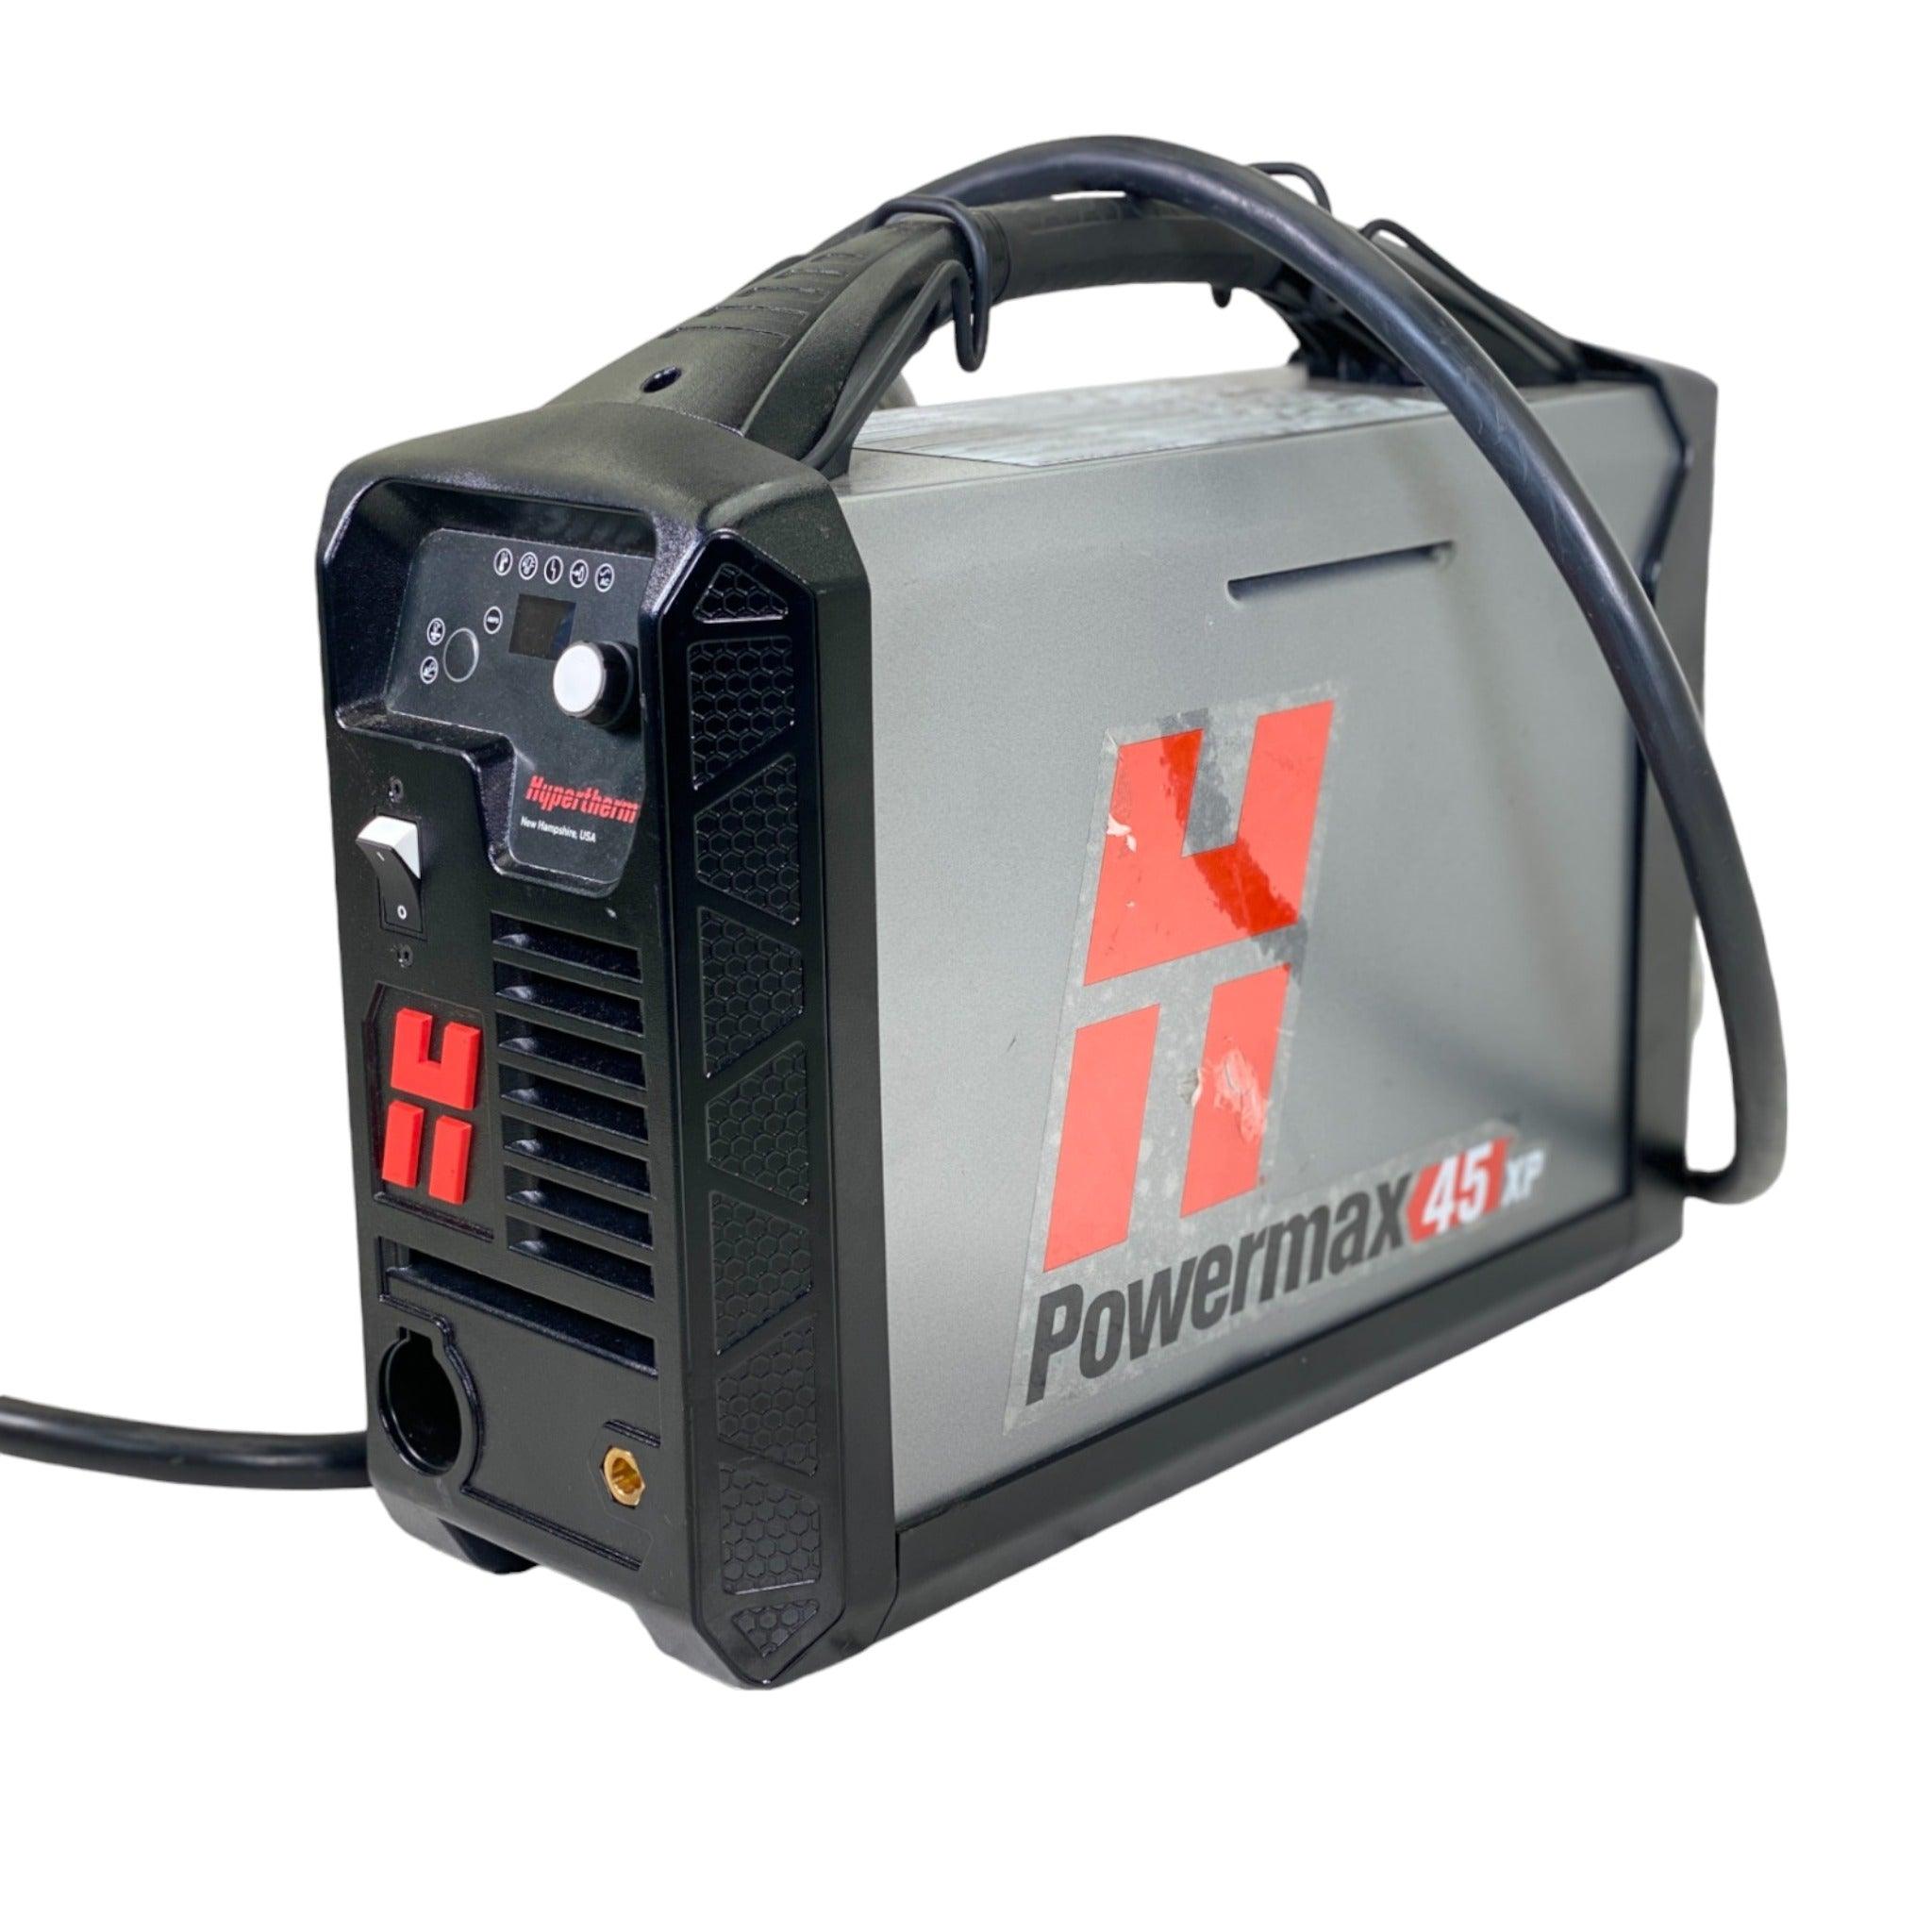 088104 Hypertherm Powermax 45 XP Power Supply w/ CPC Port 220V - ADVANCED TRUCK PARTS